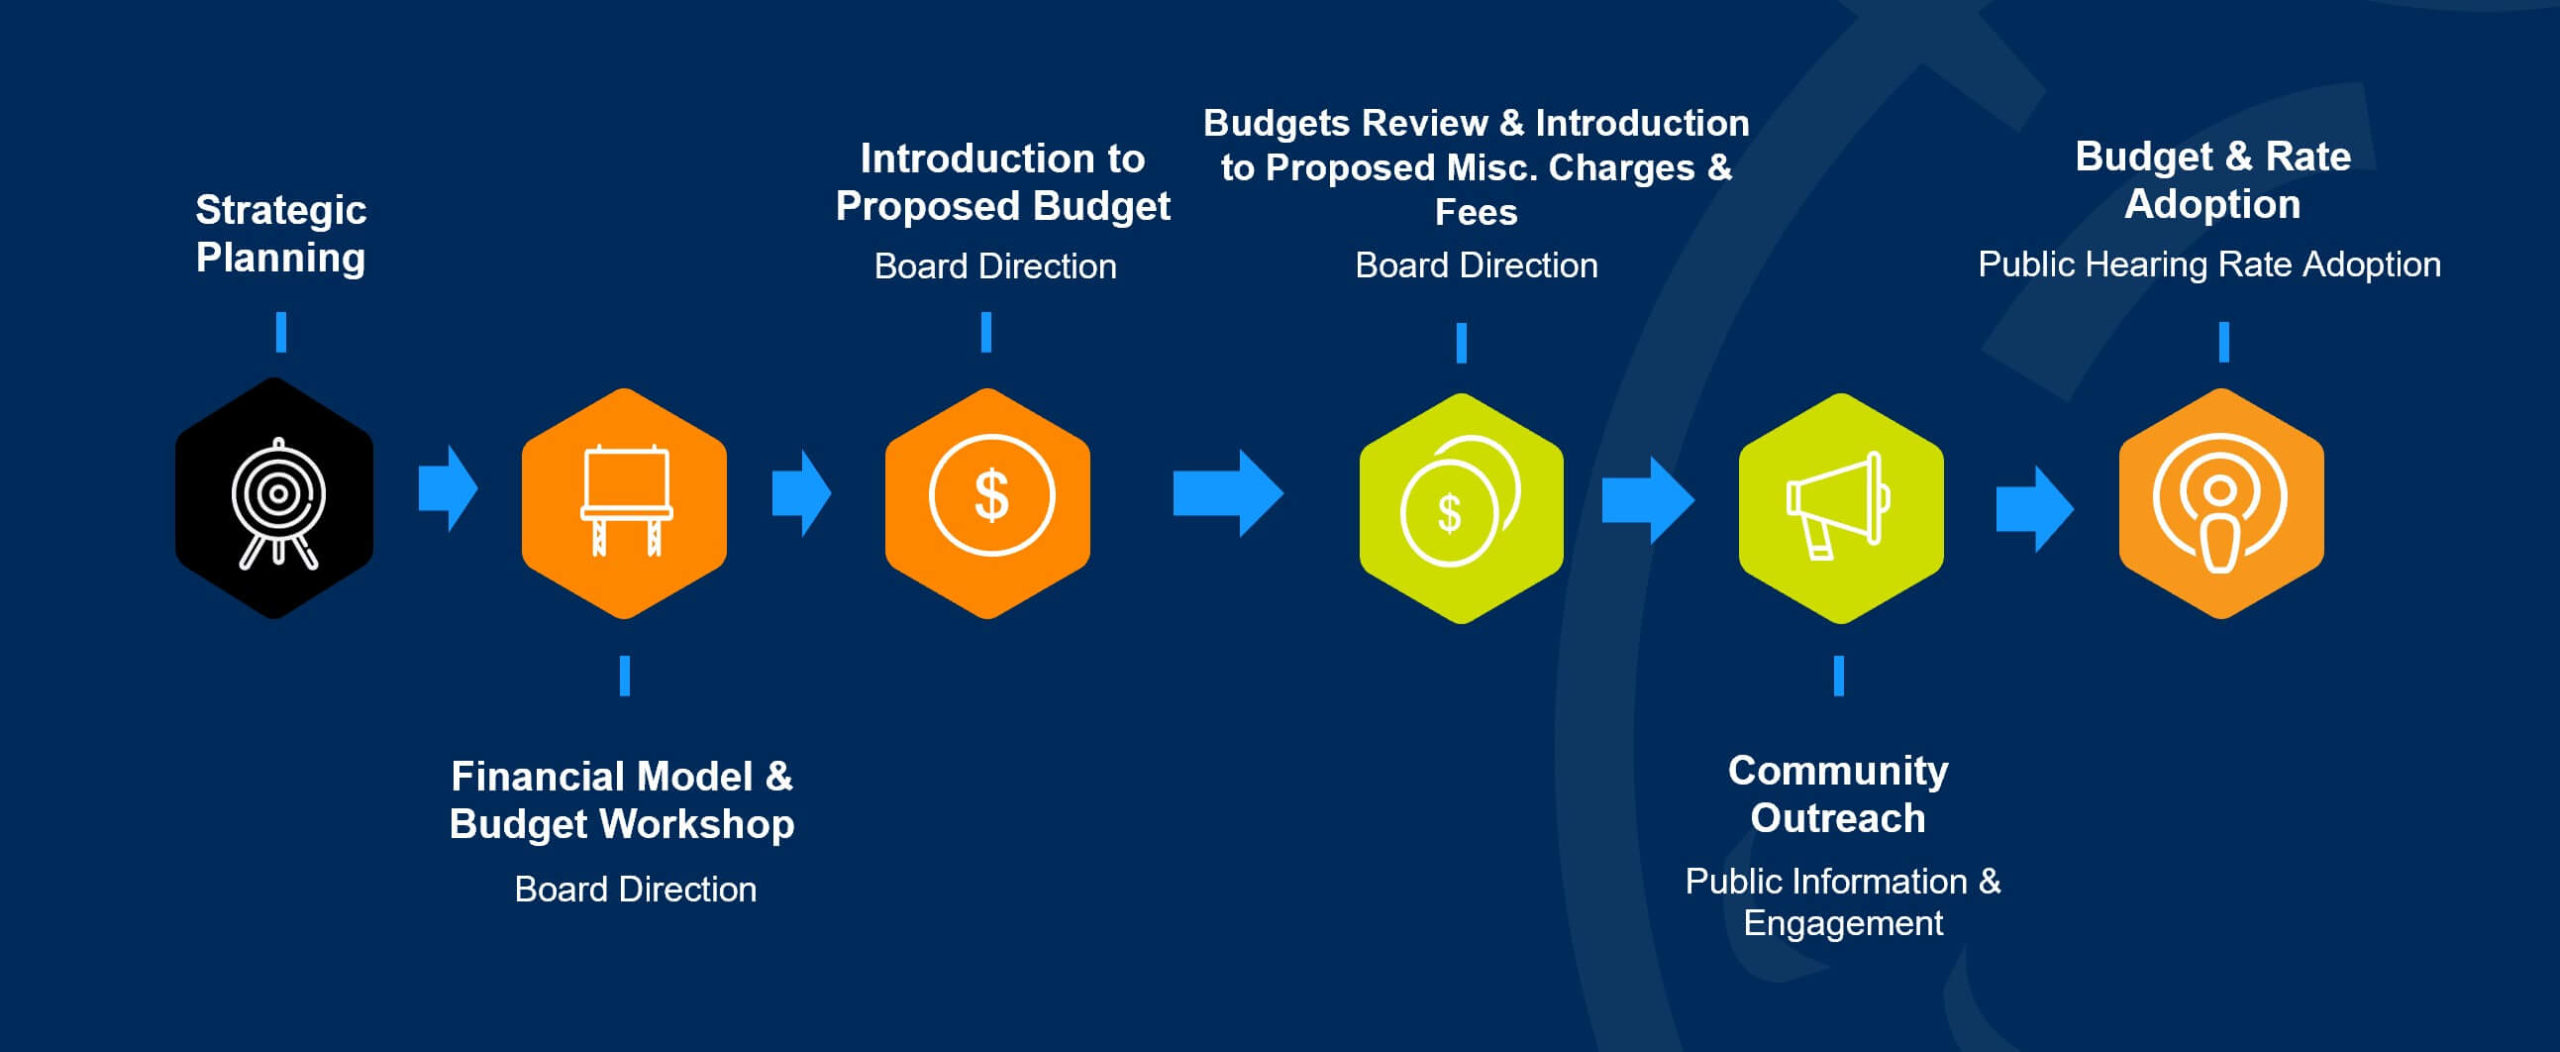 Budget process overview chart